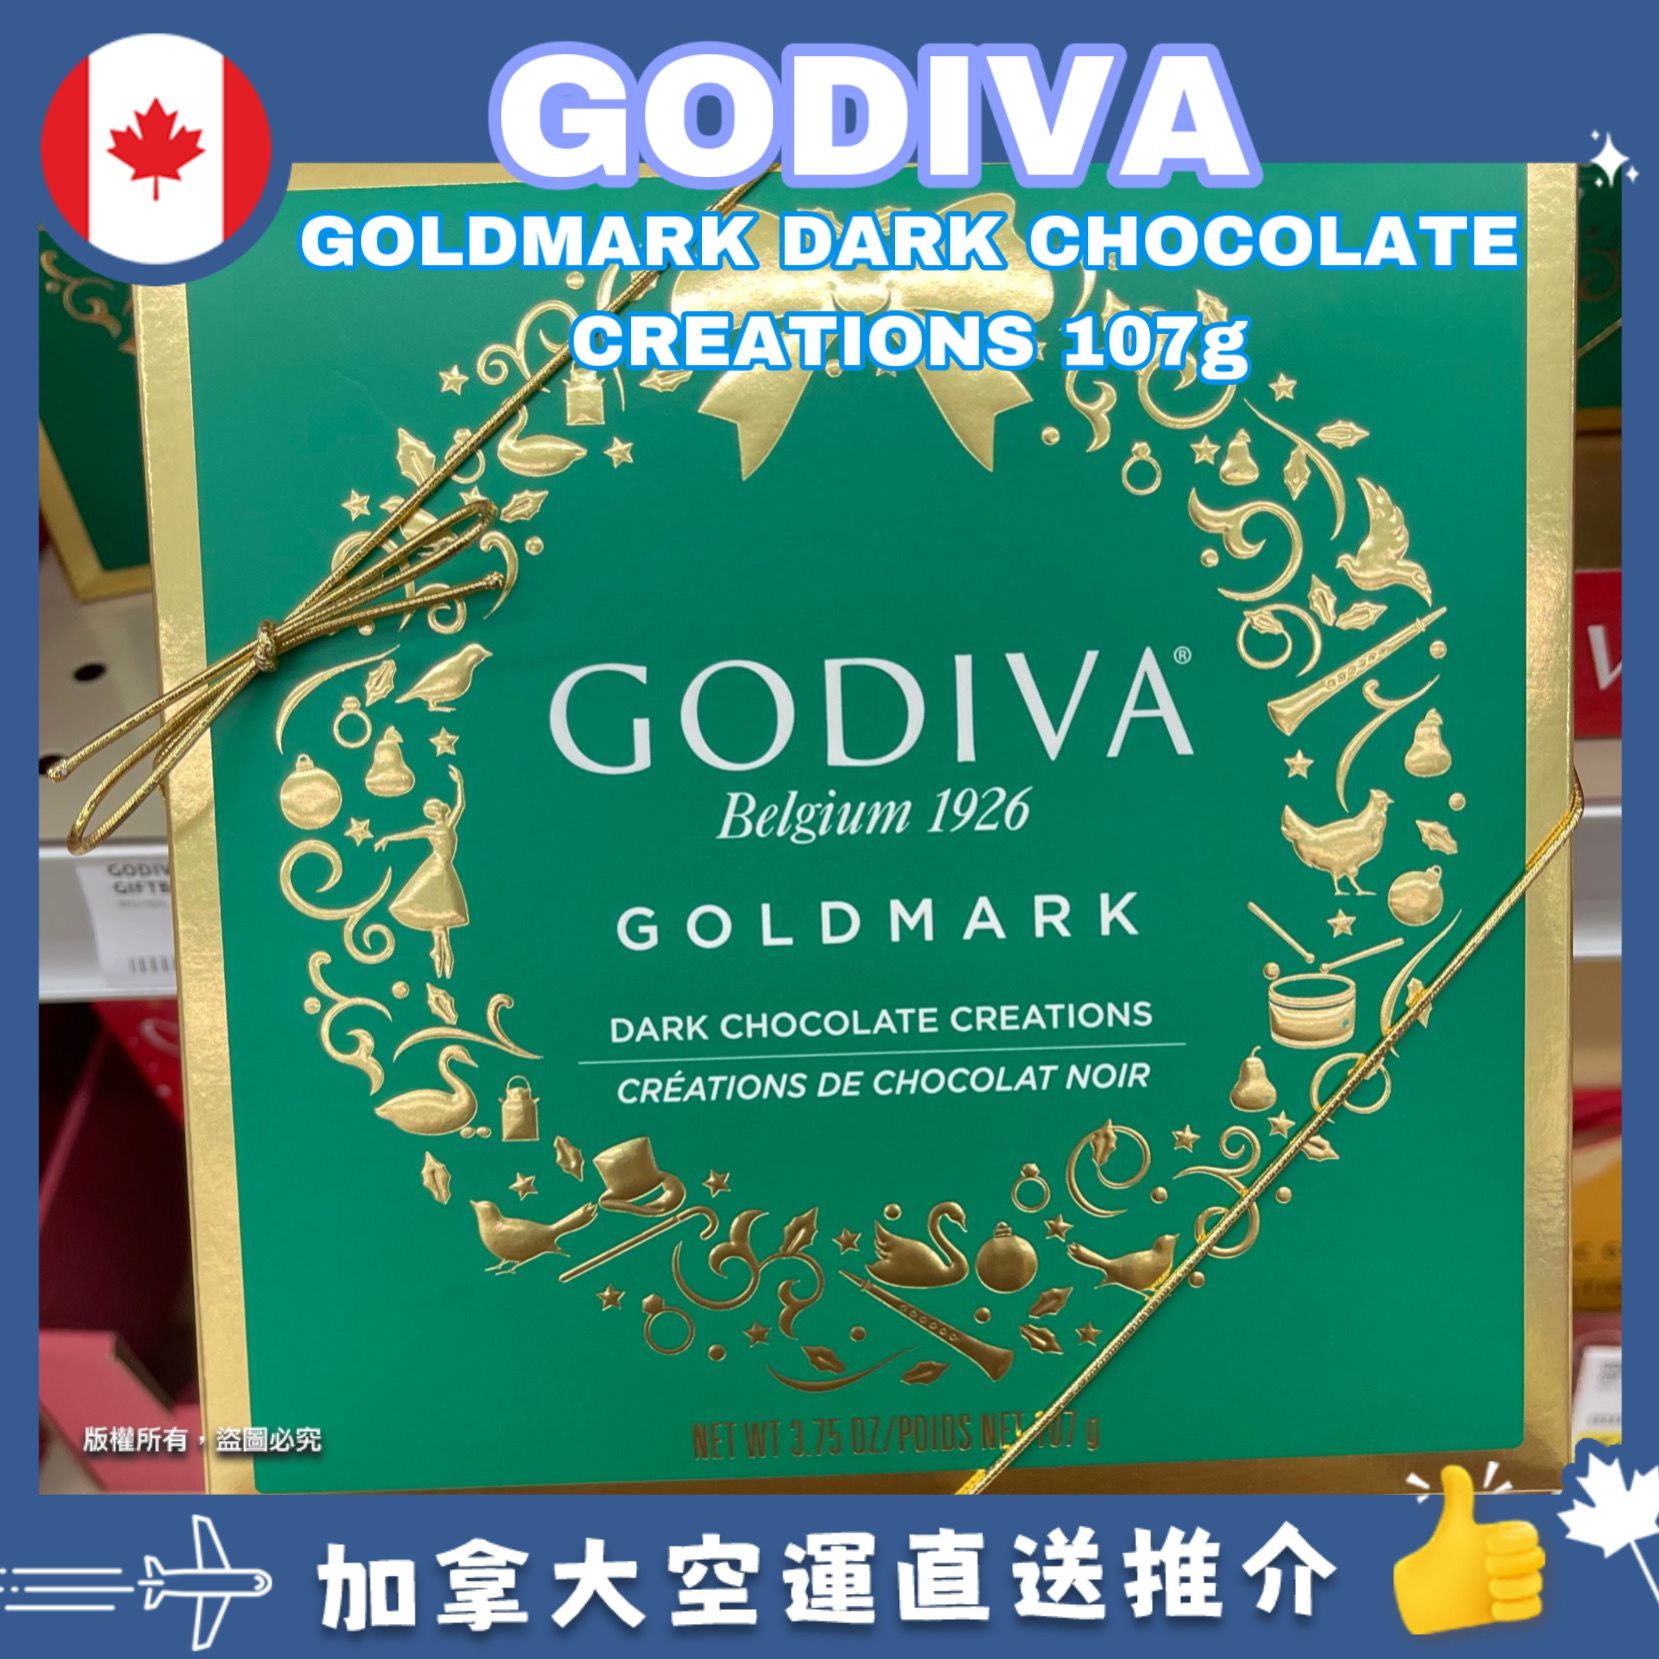 【加拿大空運直送】Godiva Goldmark Godiva Dark Chocolate Gift Box 黑巧克力禮盒 107g